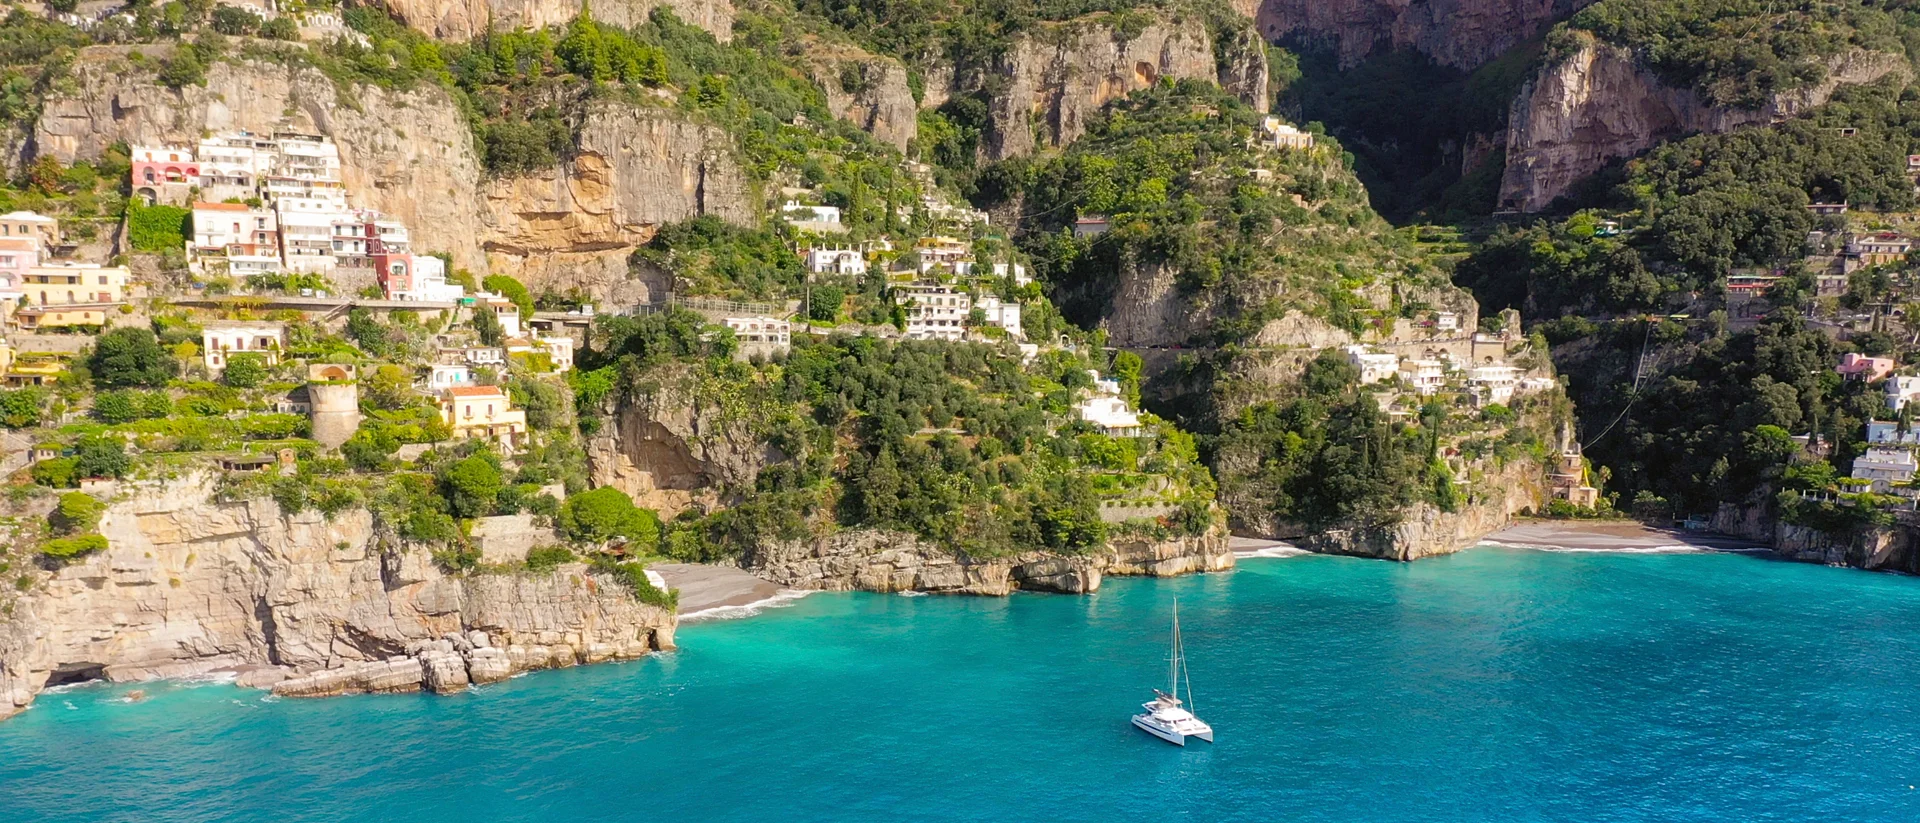 Blaue Küste mit Klippen bei Katamarancharter in Neapel